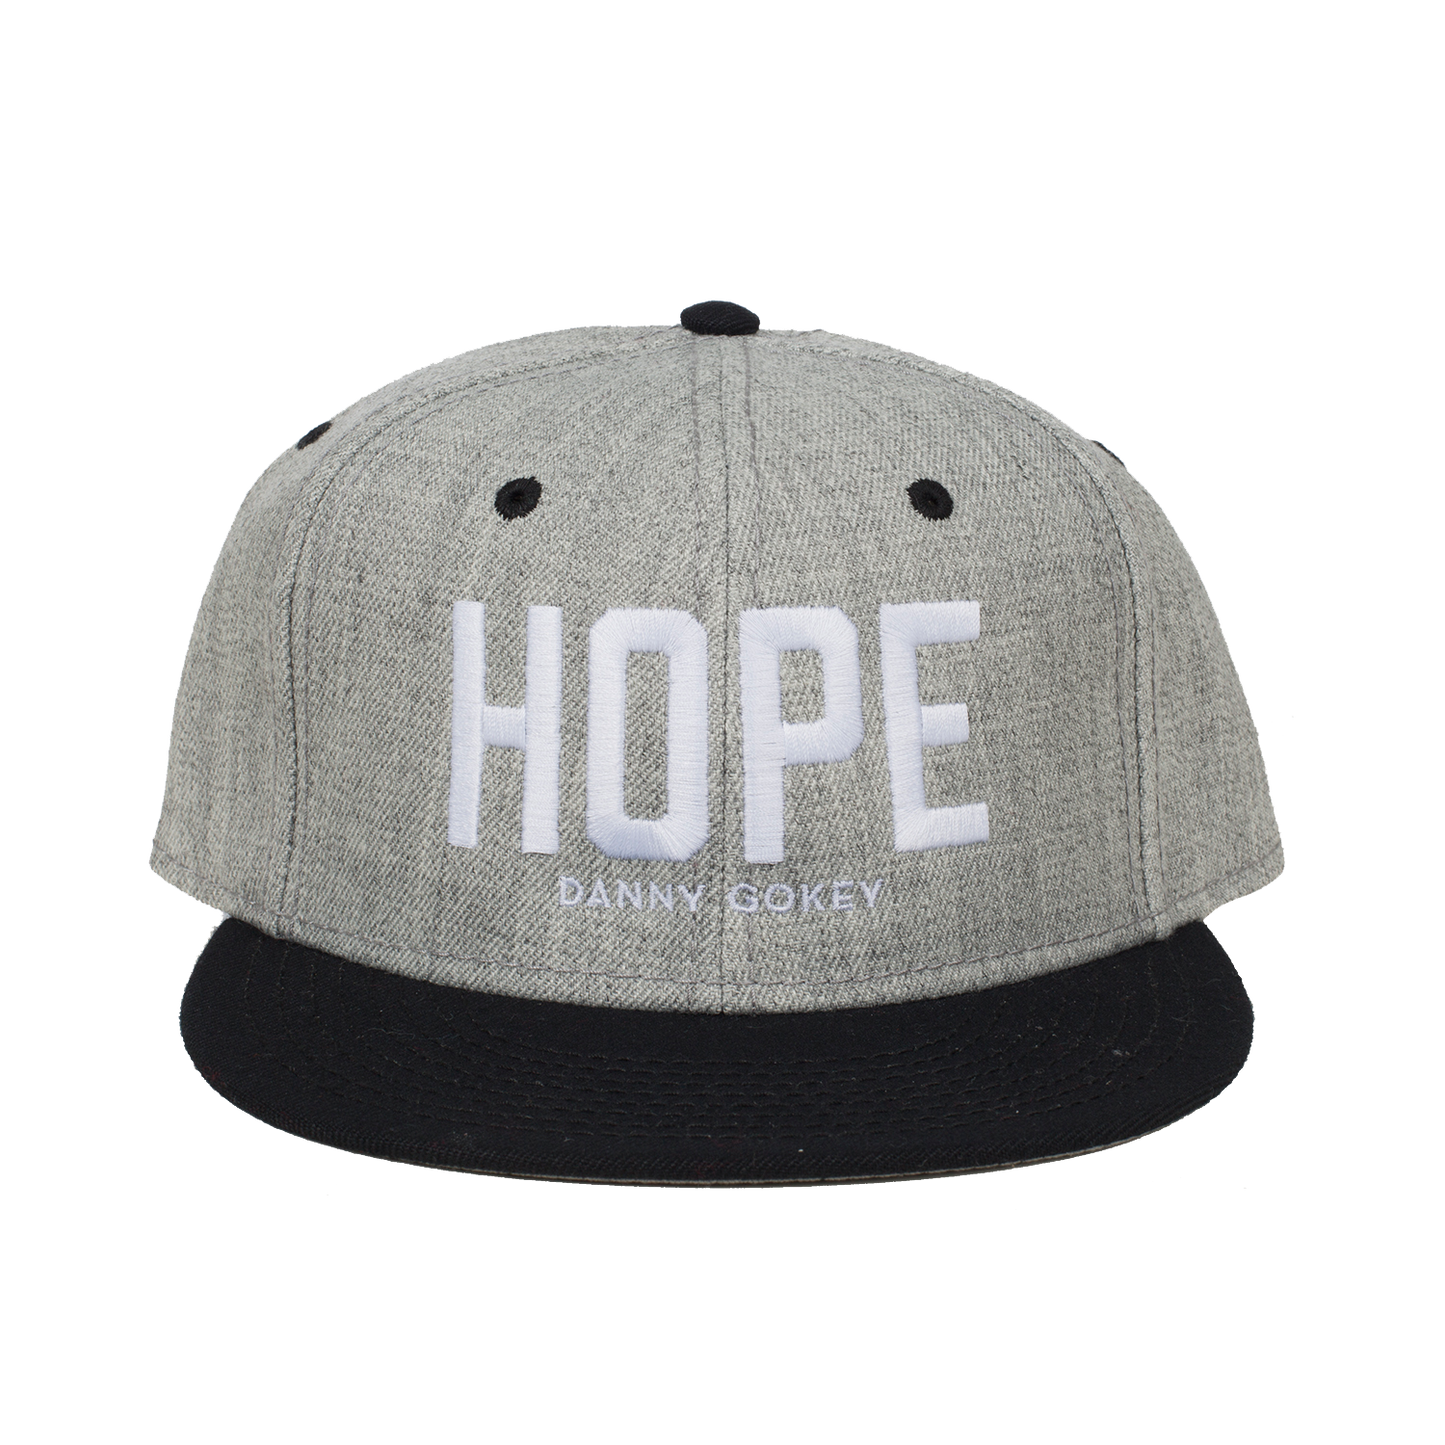 Hope grey black adjustable snapback hat product shot Danny Gokey